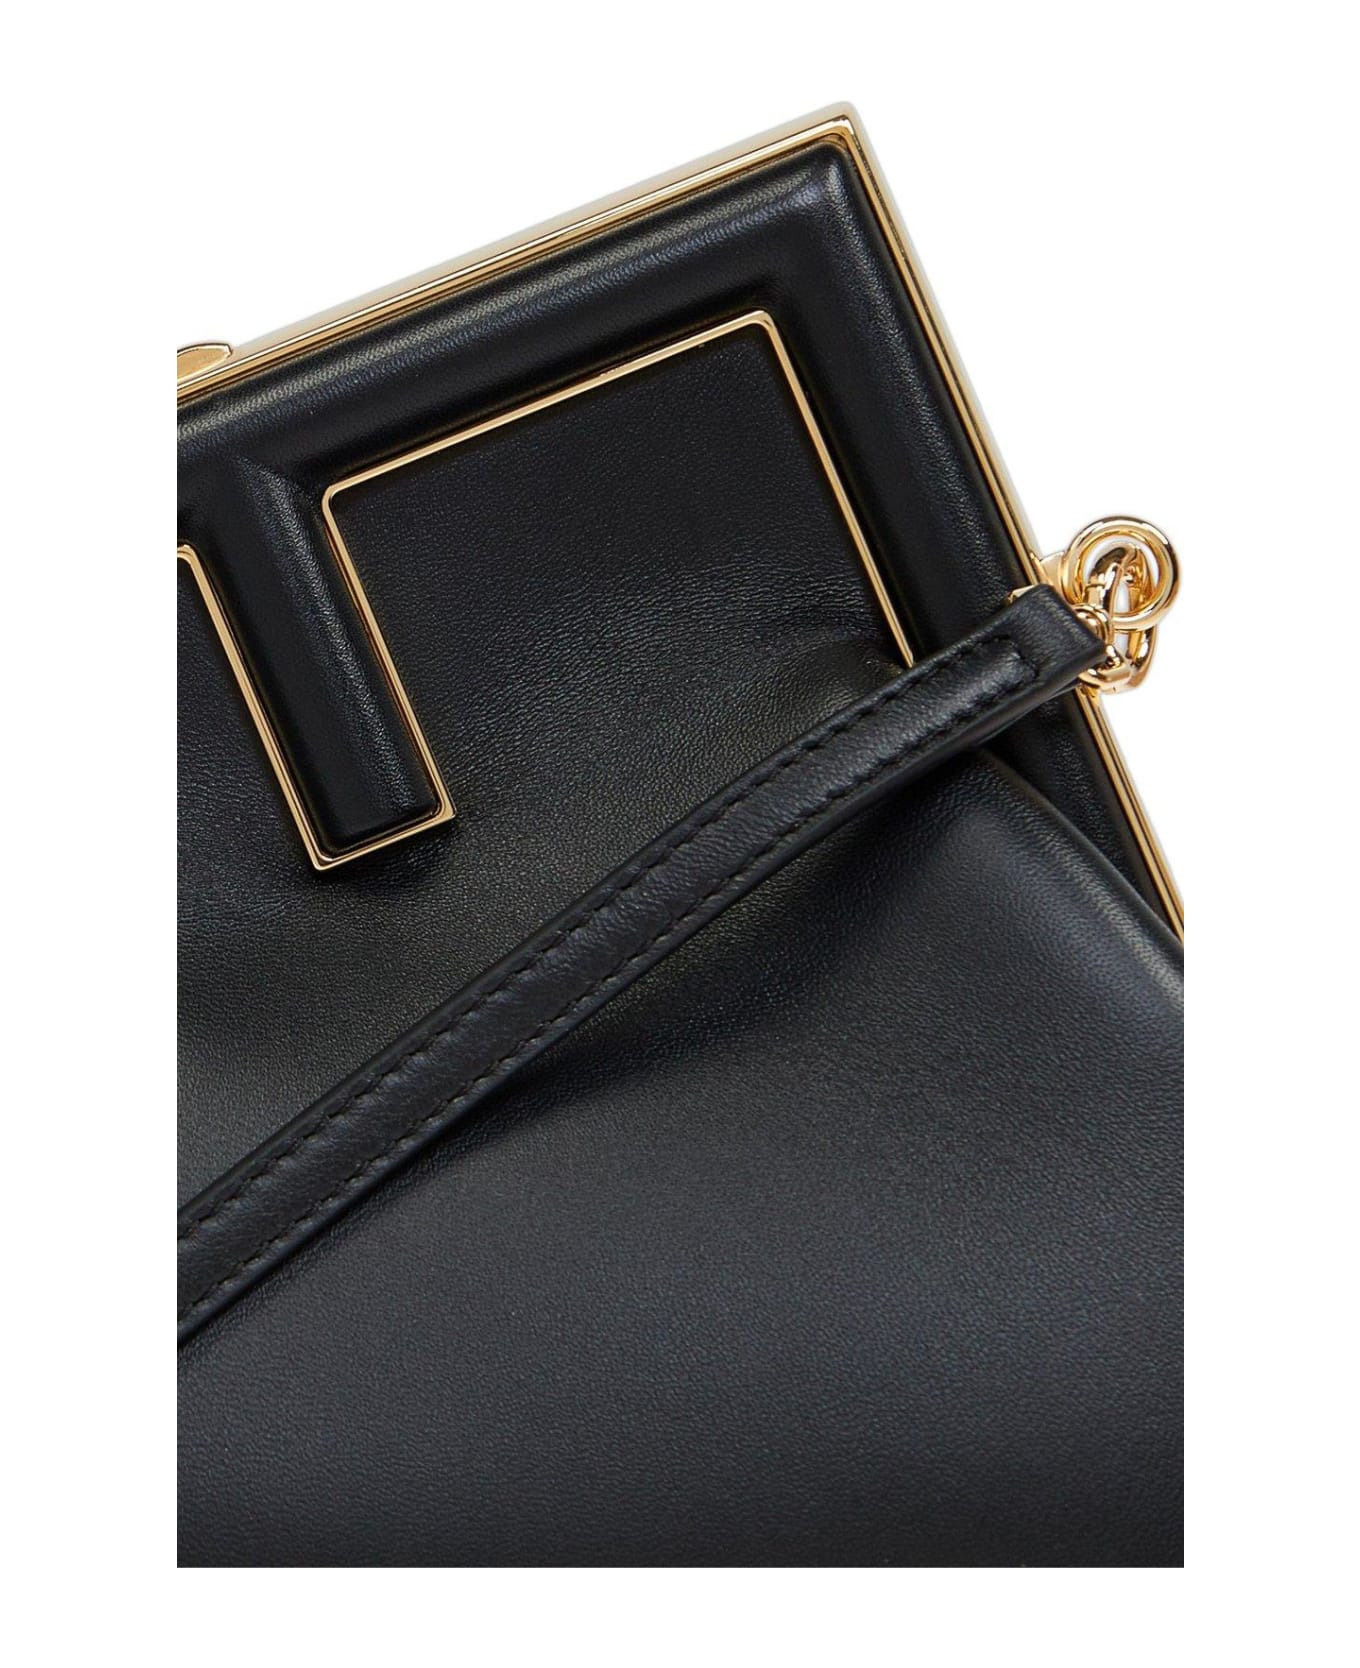 Fendi Logo Detailed Small Clutch Bag - Nero/oro soft